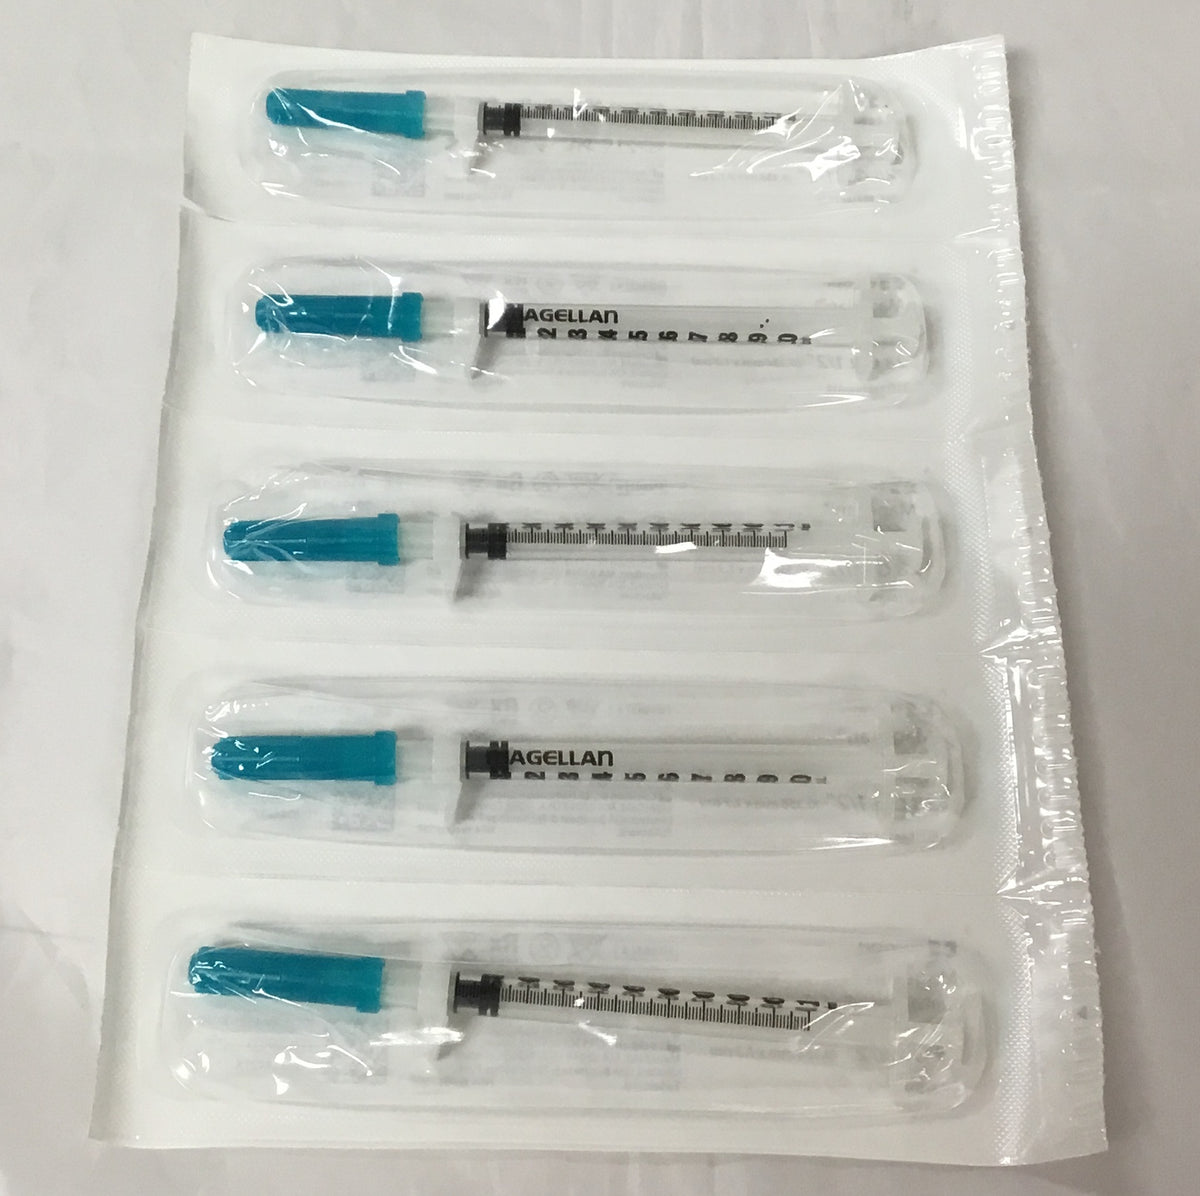 Magellan™ Insulin & Tuberculin Safety Syringes